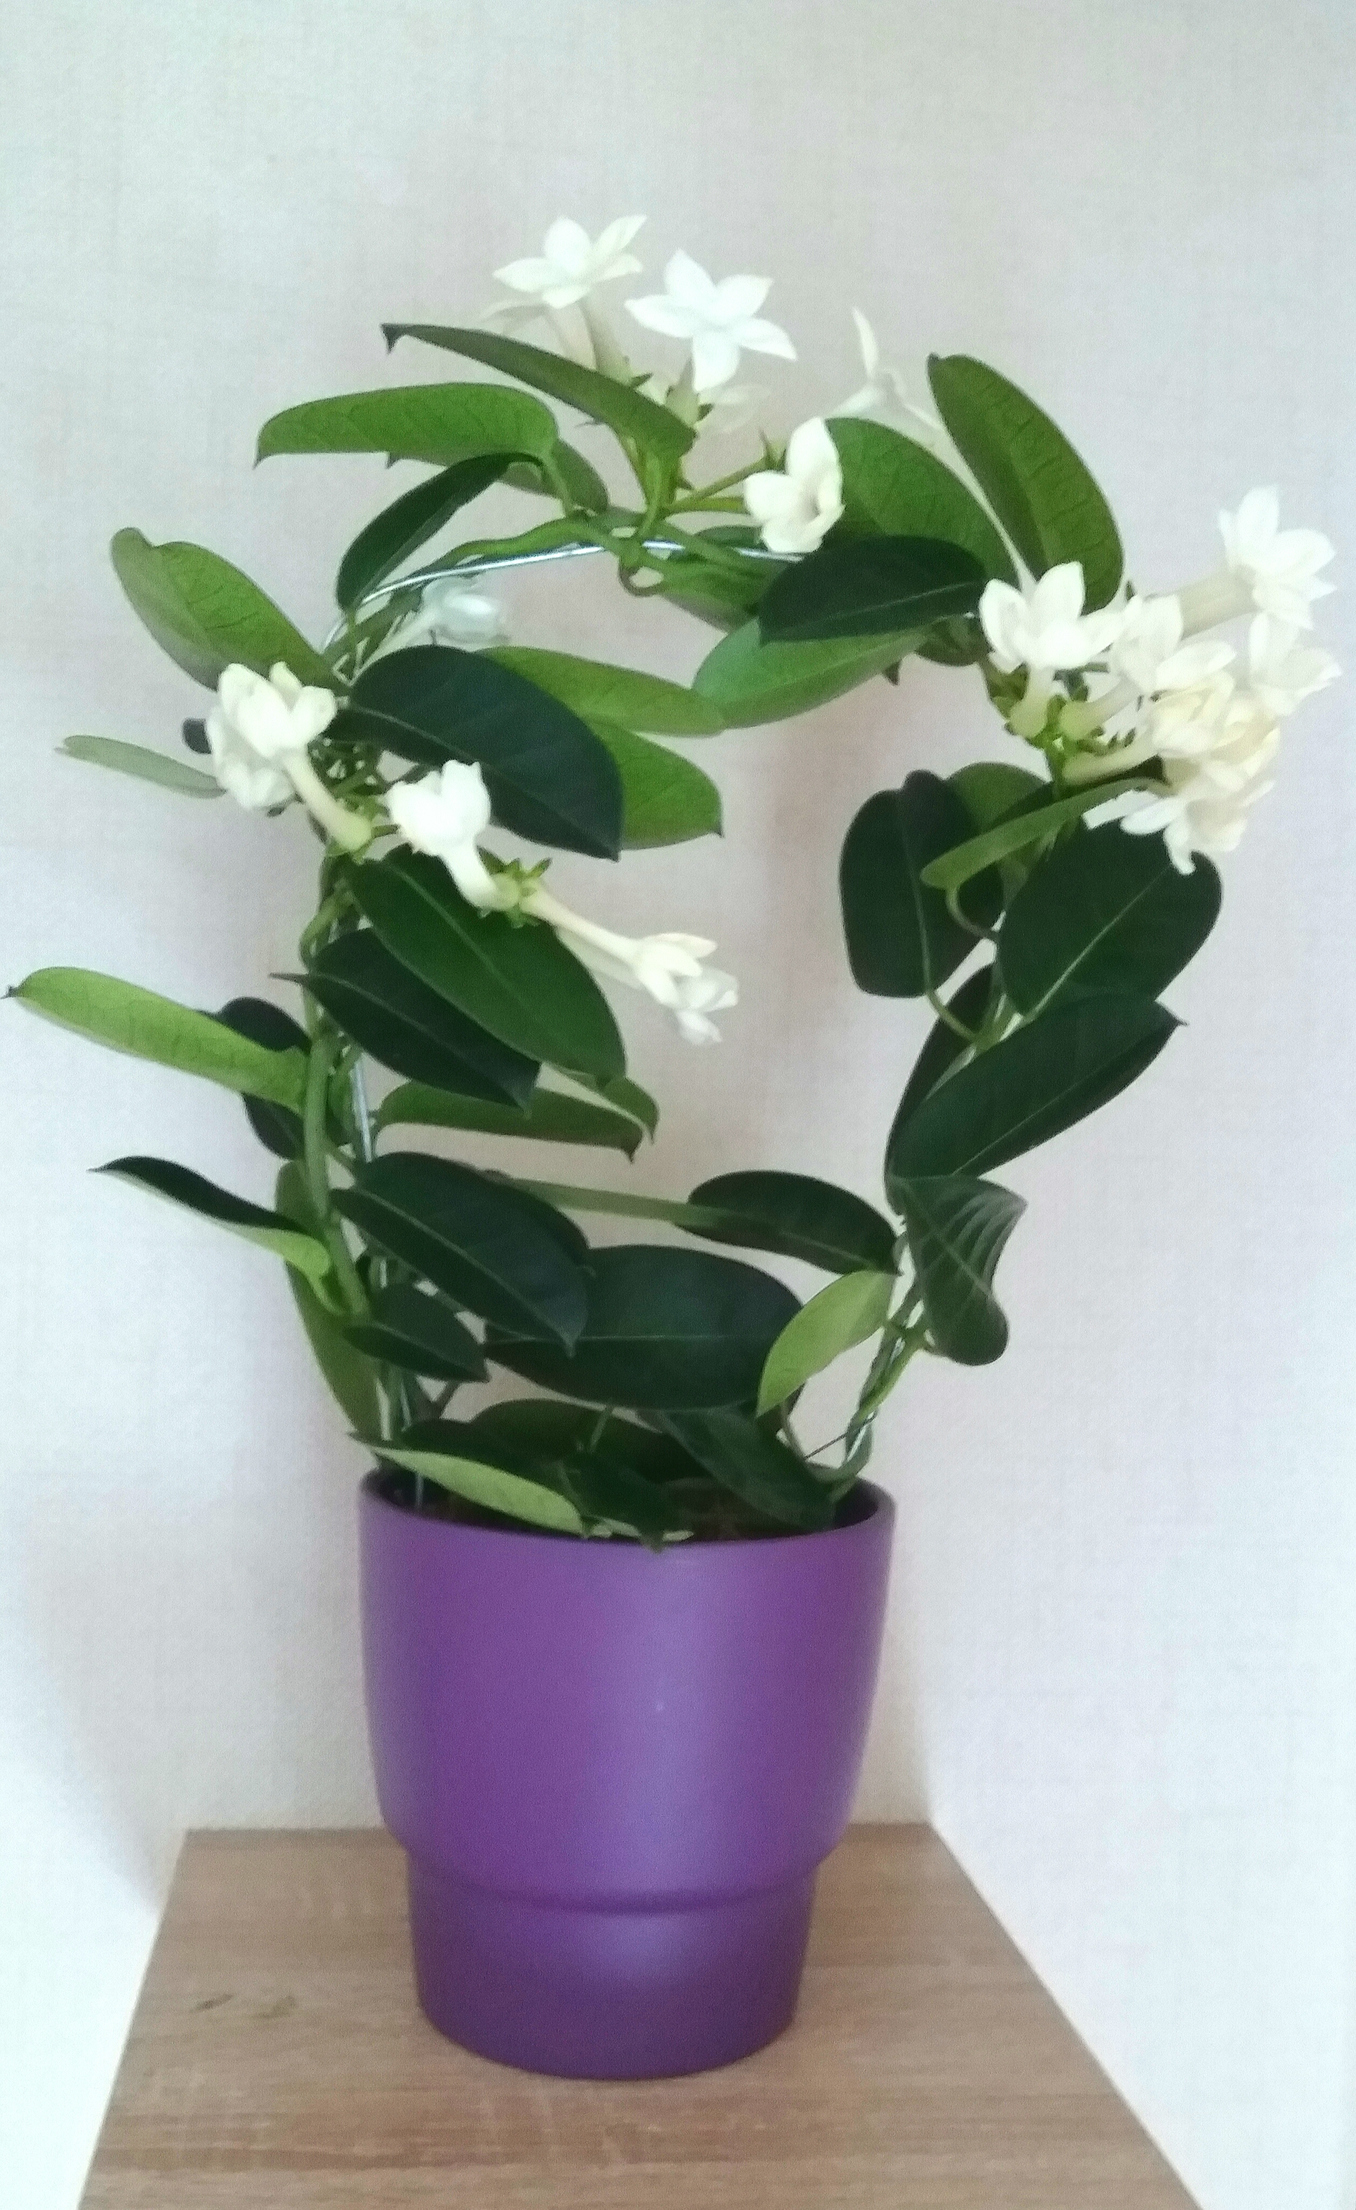 Stephanotis floribunda (Madagascar jasmine, waxflower, Hawaiian wedding flower, bridal wreath)